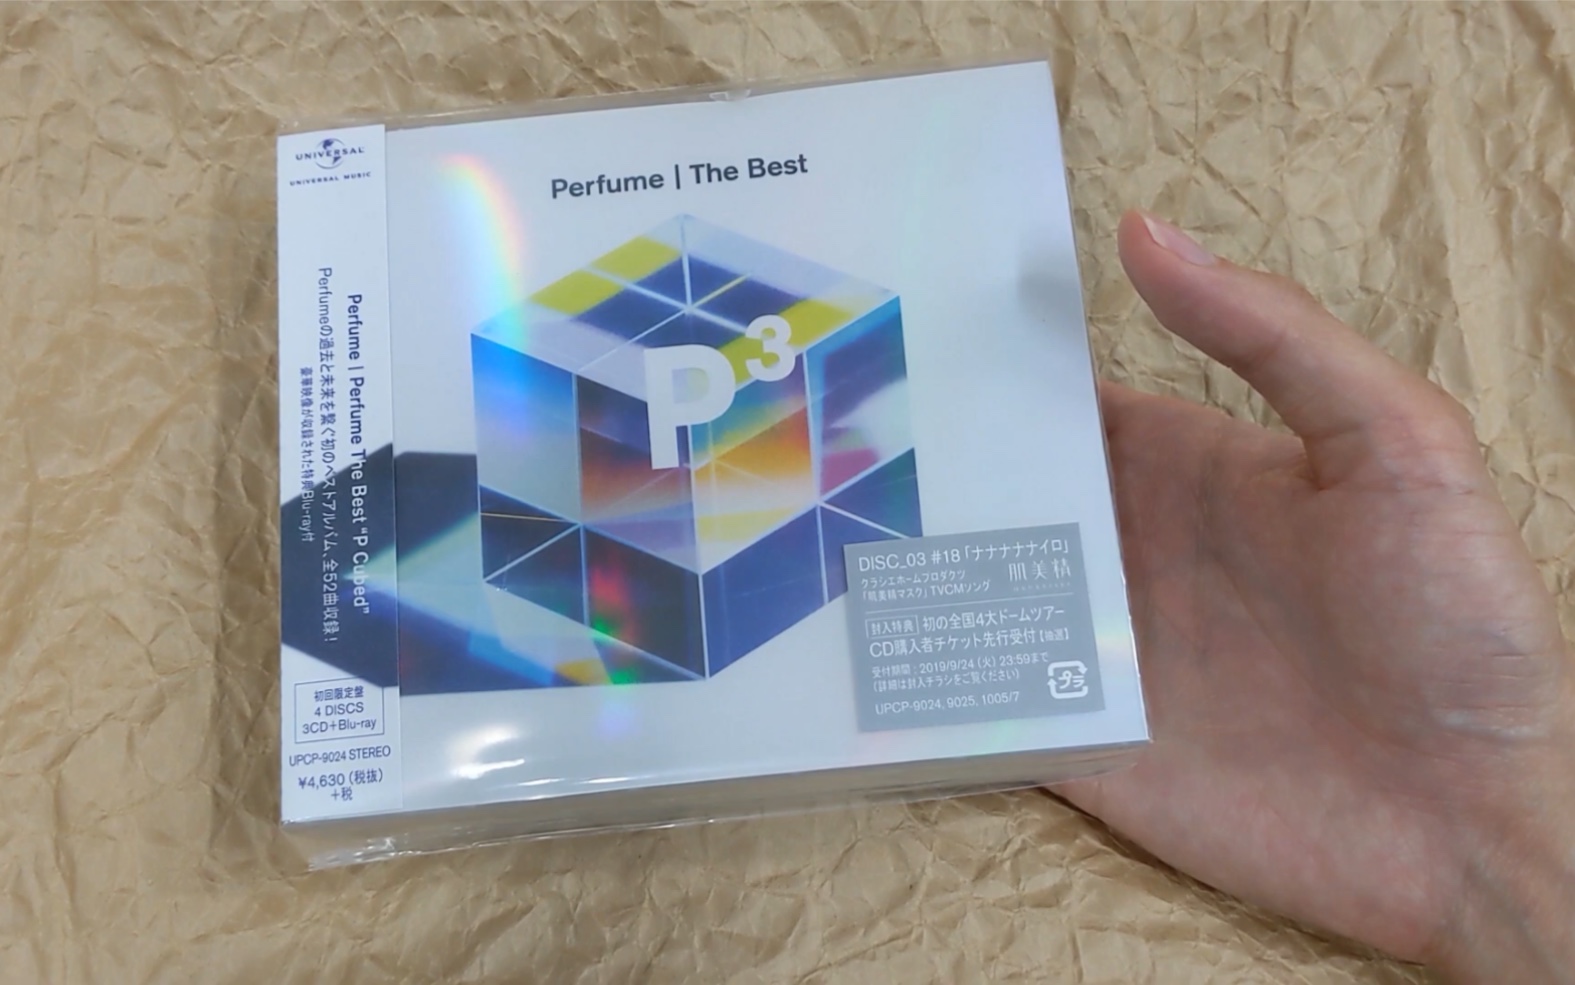 Perfume The Best “P Cubed” 初回盘开箱视频_哔哩哔哩(゜-゜)つロ干杯 